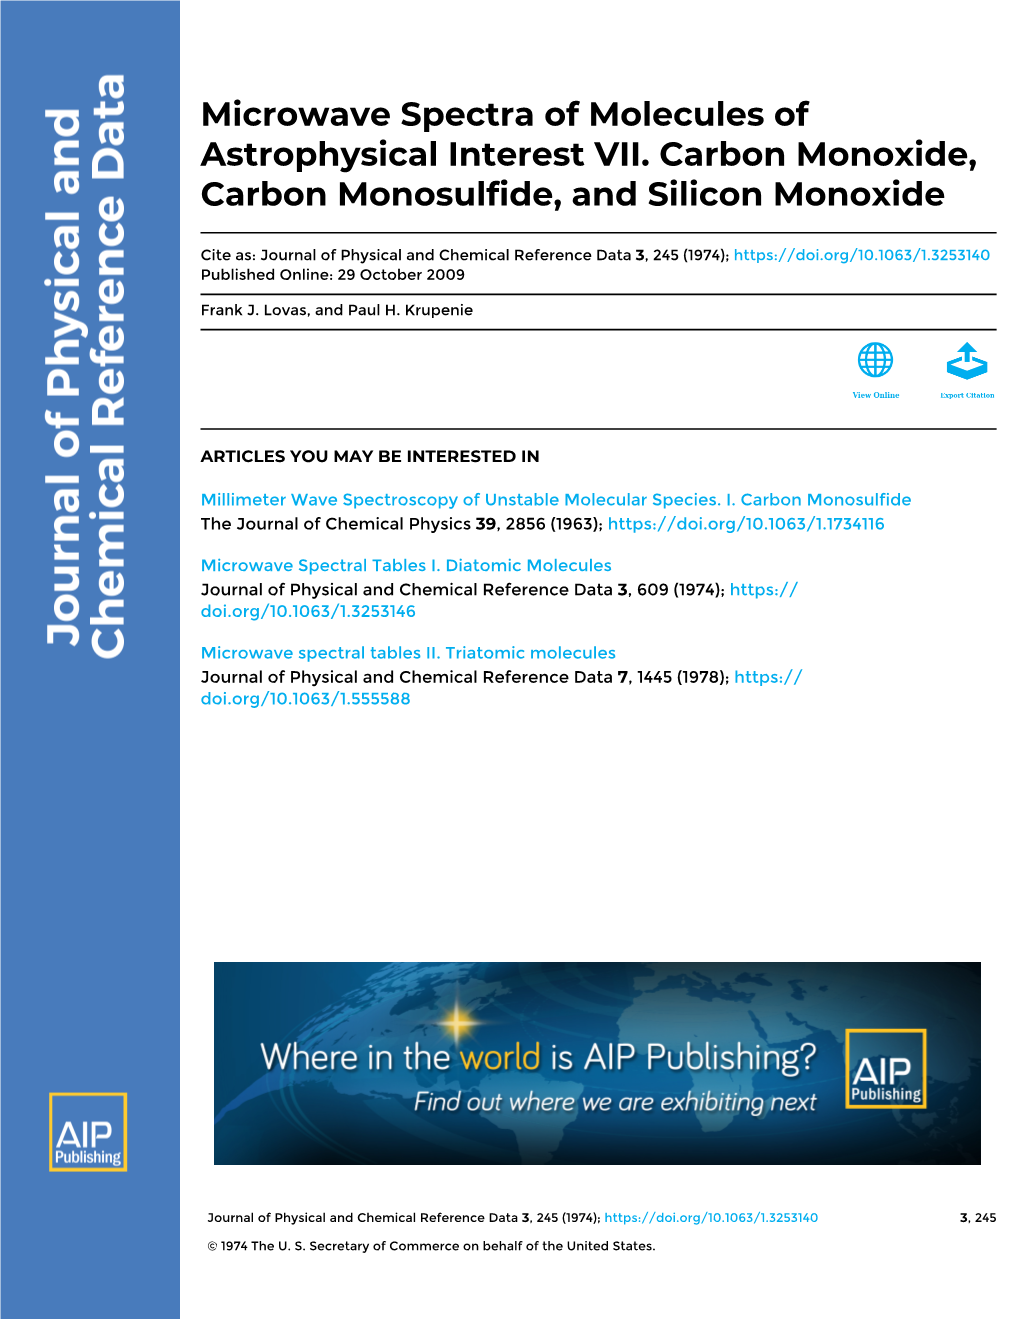 Microwave Spectra of Molecules of Astrophysical Interest VII. Carbon Monoxide, Carbon Monosulfide, and Silicon Monoxide